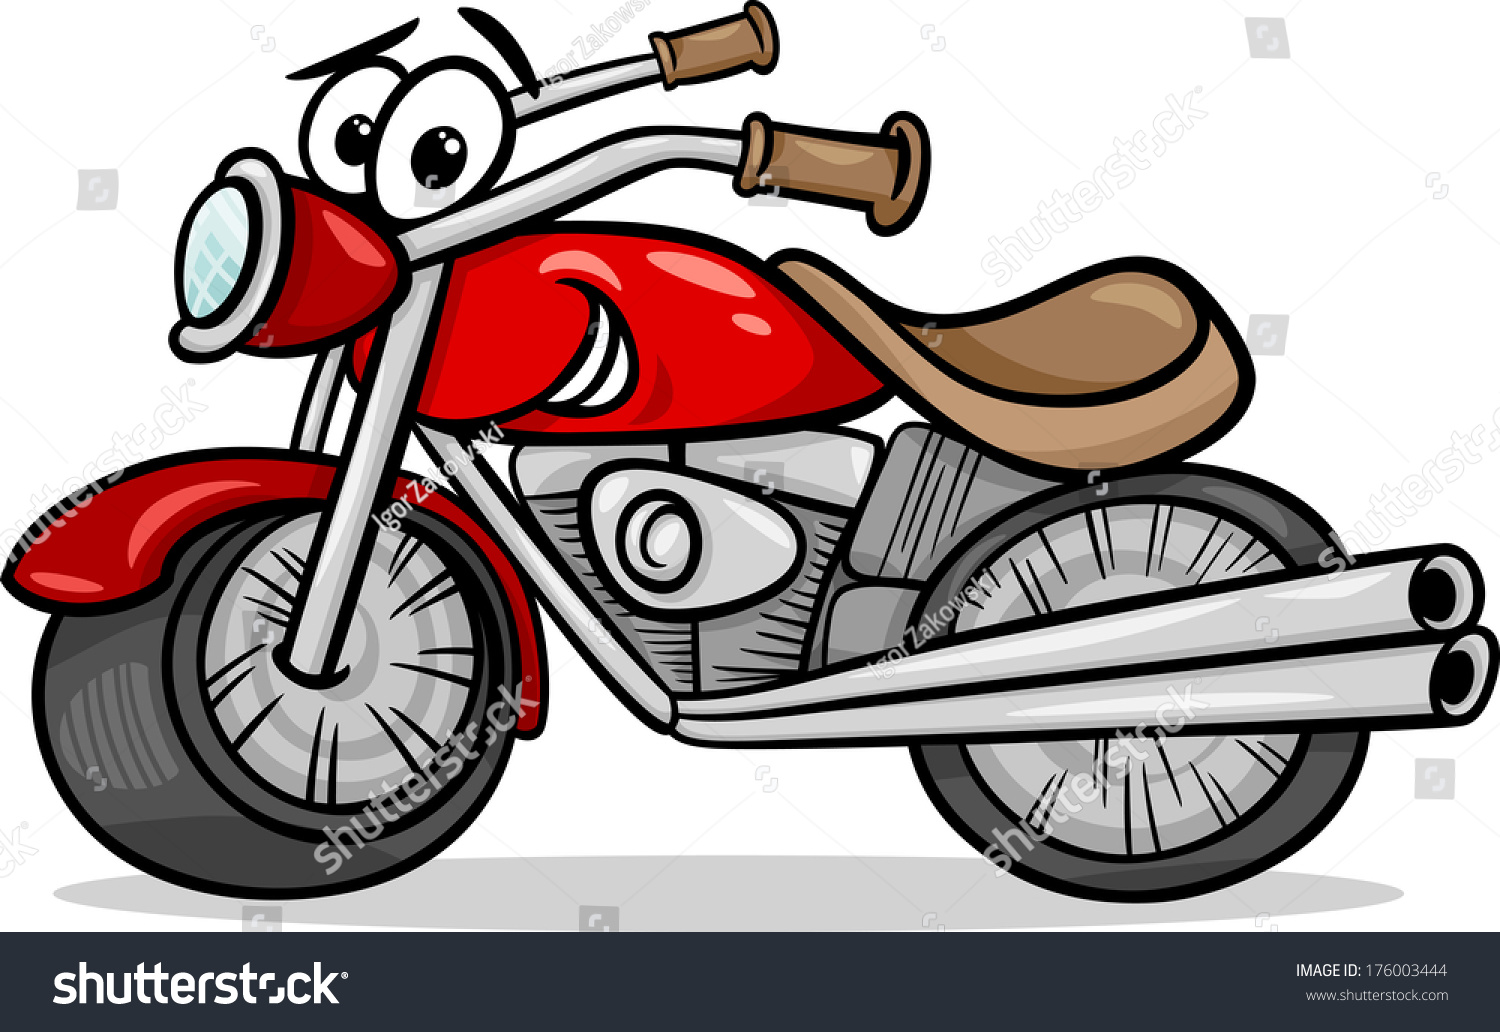 Cartoon Vector Illustration Of Funny Motor Bike Vehicle Or Chopper